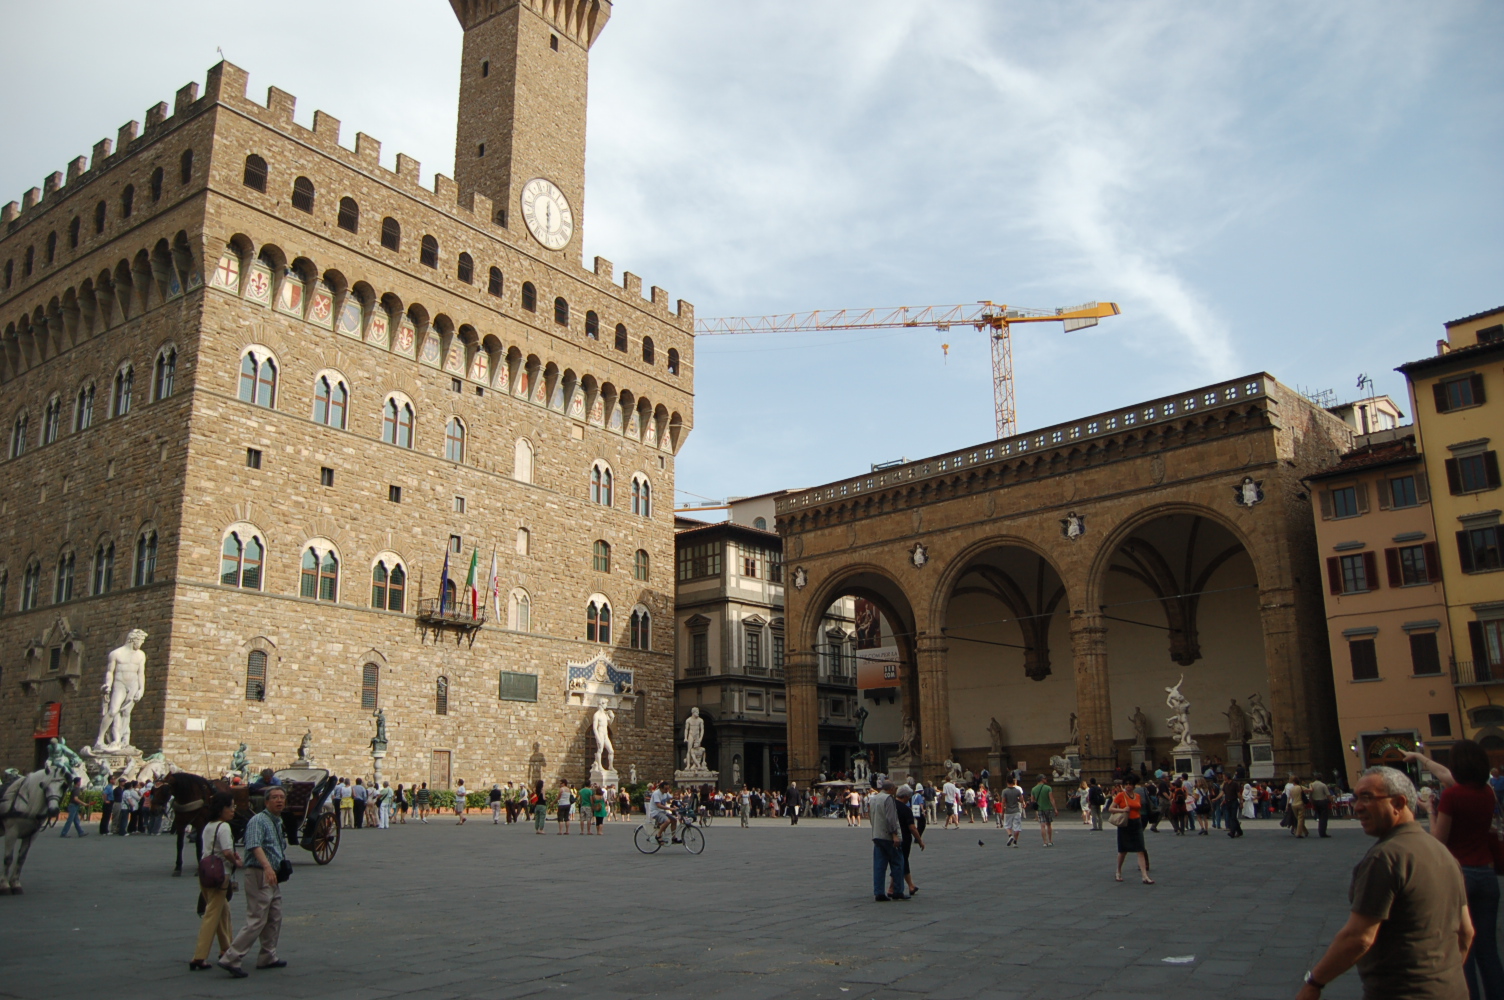 Piazza de Signoria in Florence, Italy